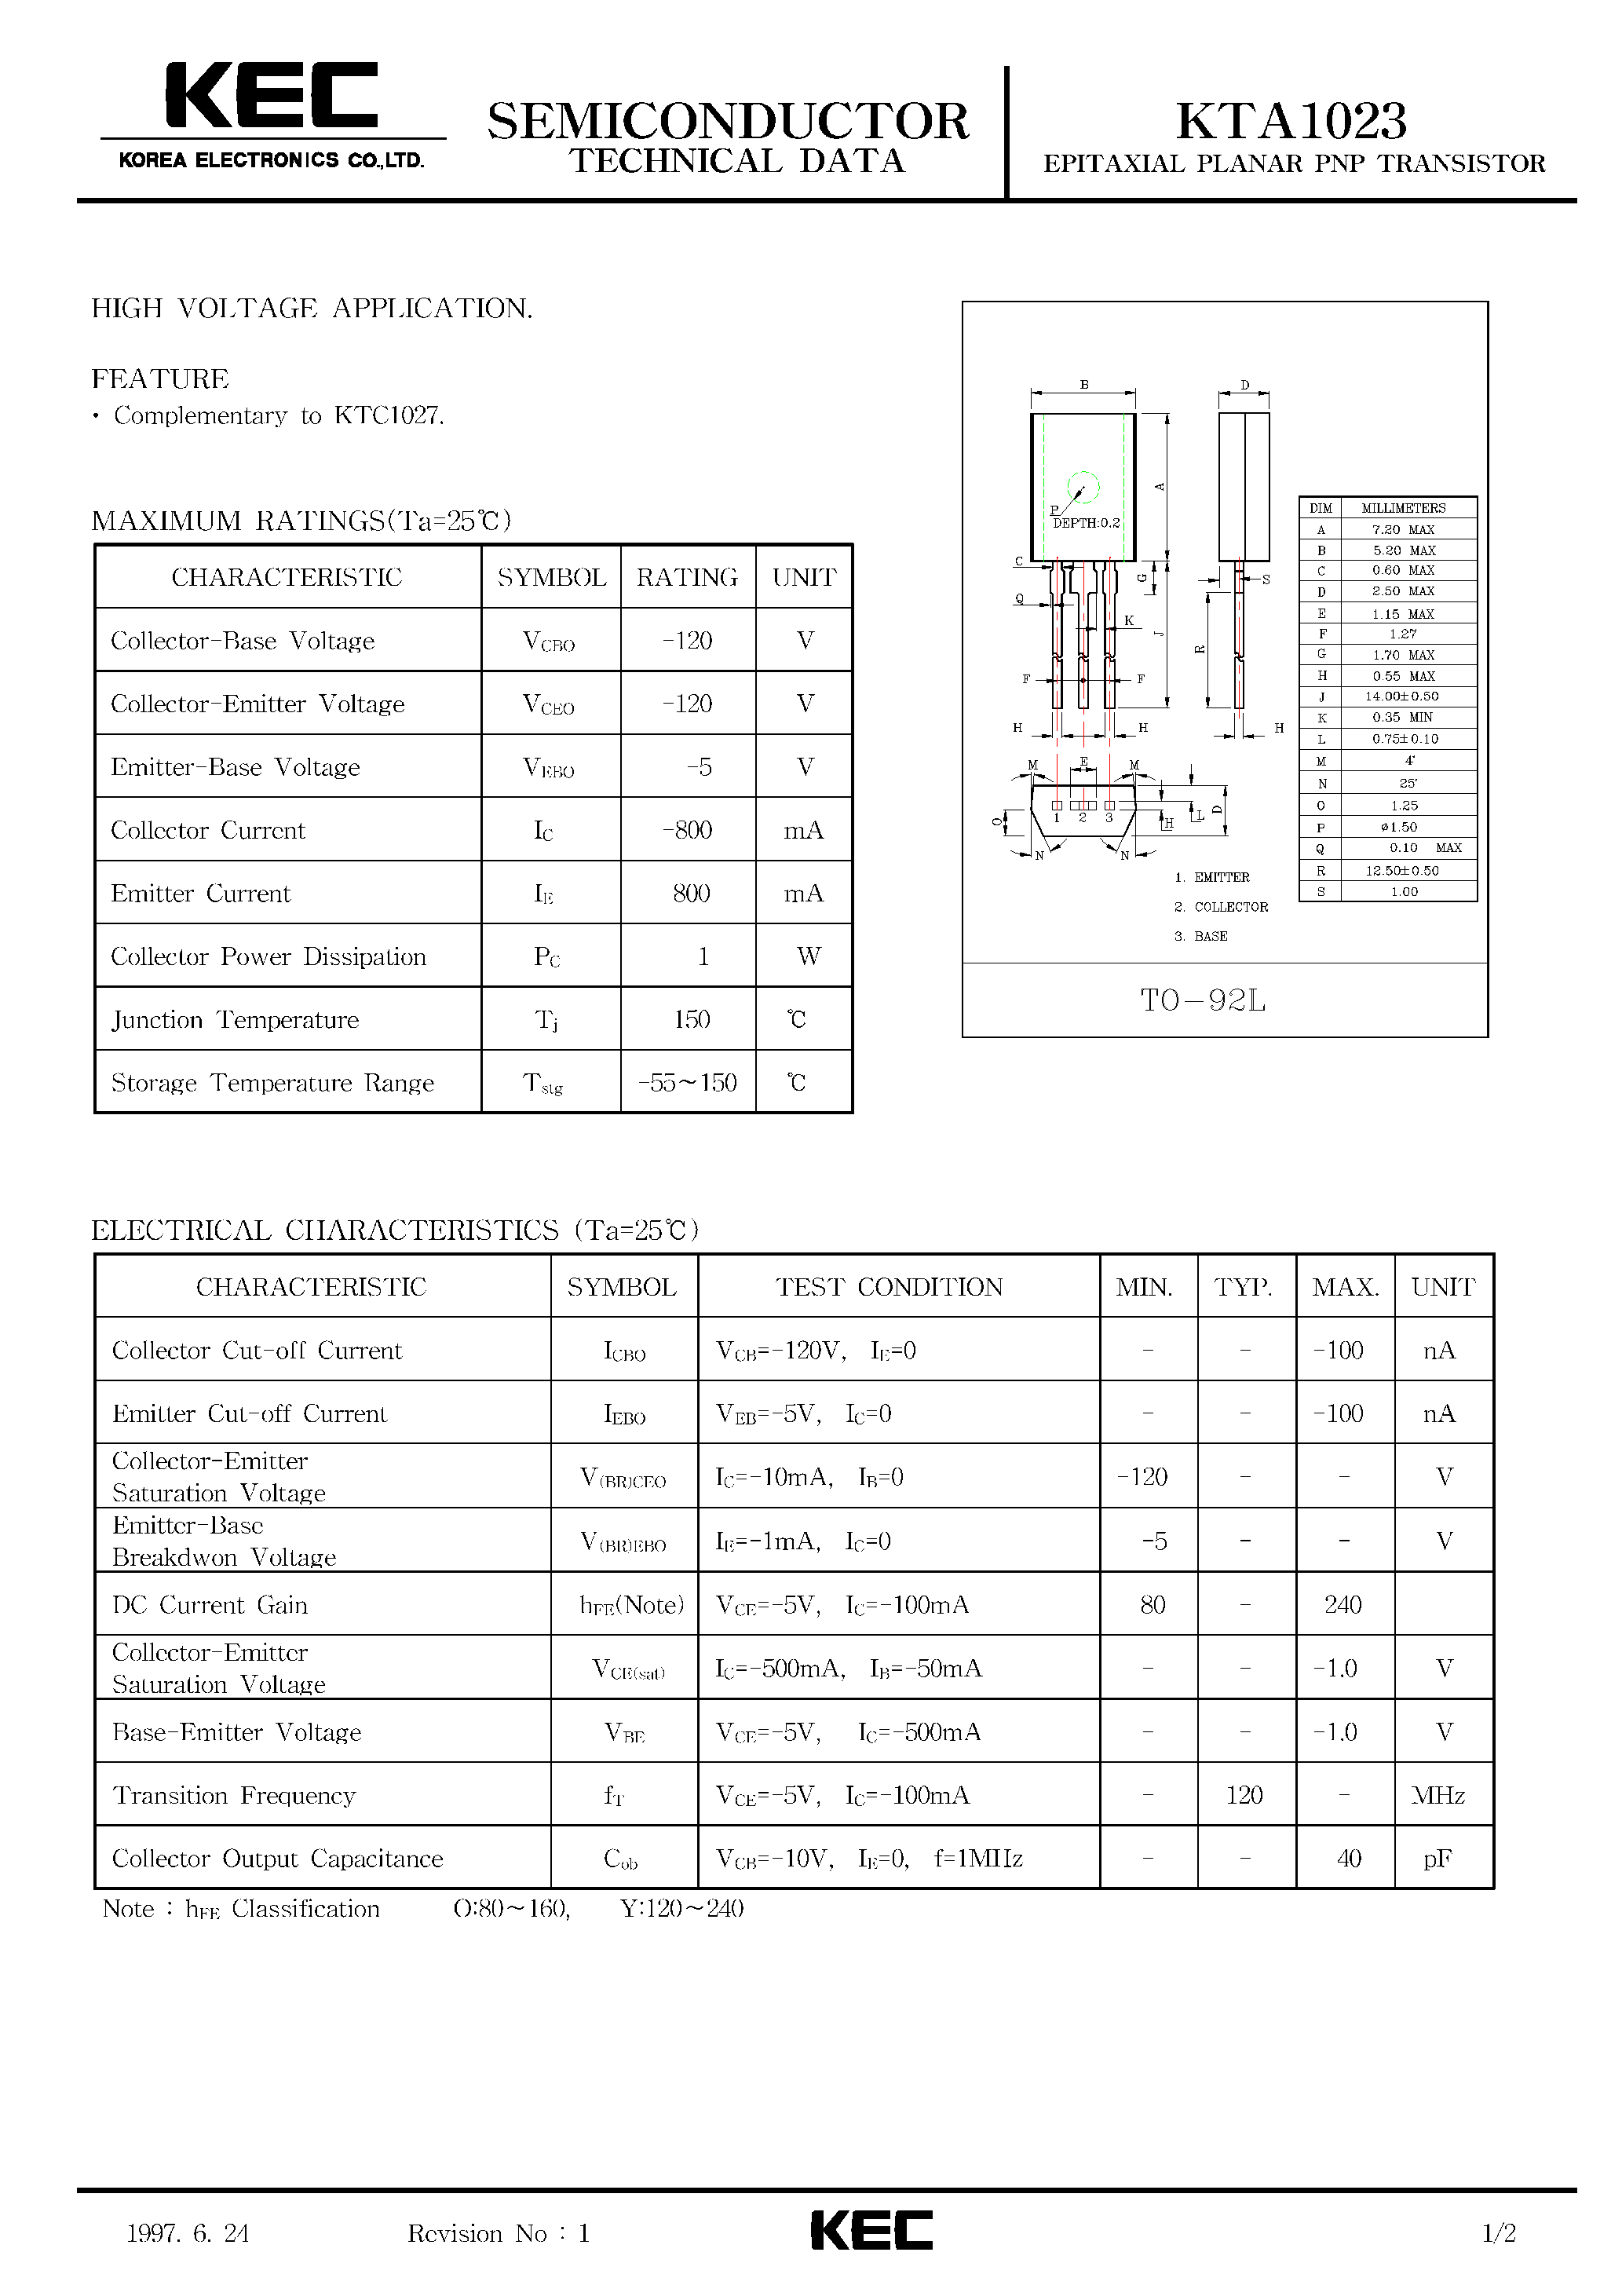 Datasheet KTA1023 - EPITAXIAL PLANAR PNP TRANSISTOR (HIGH VOLTAGE) page 1